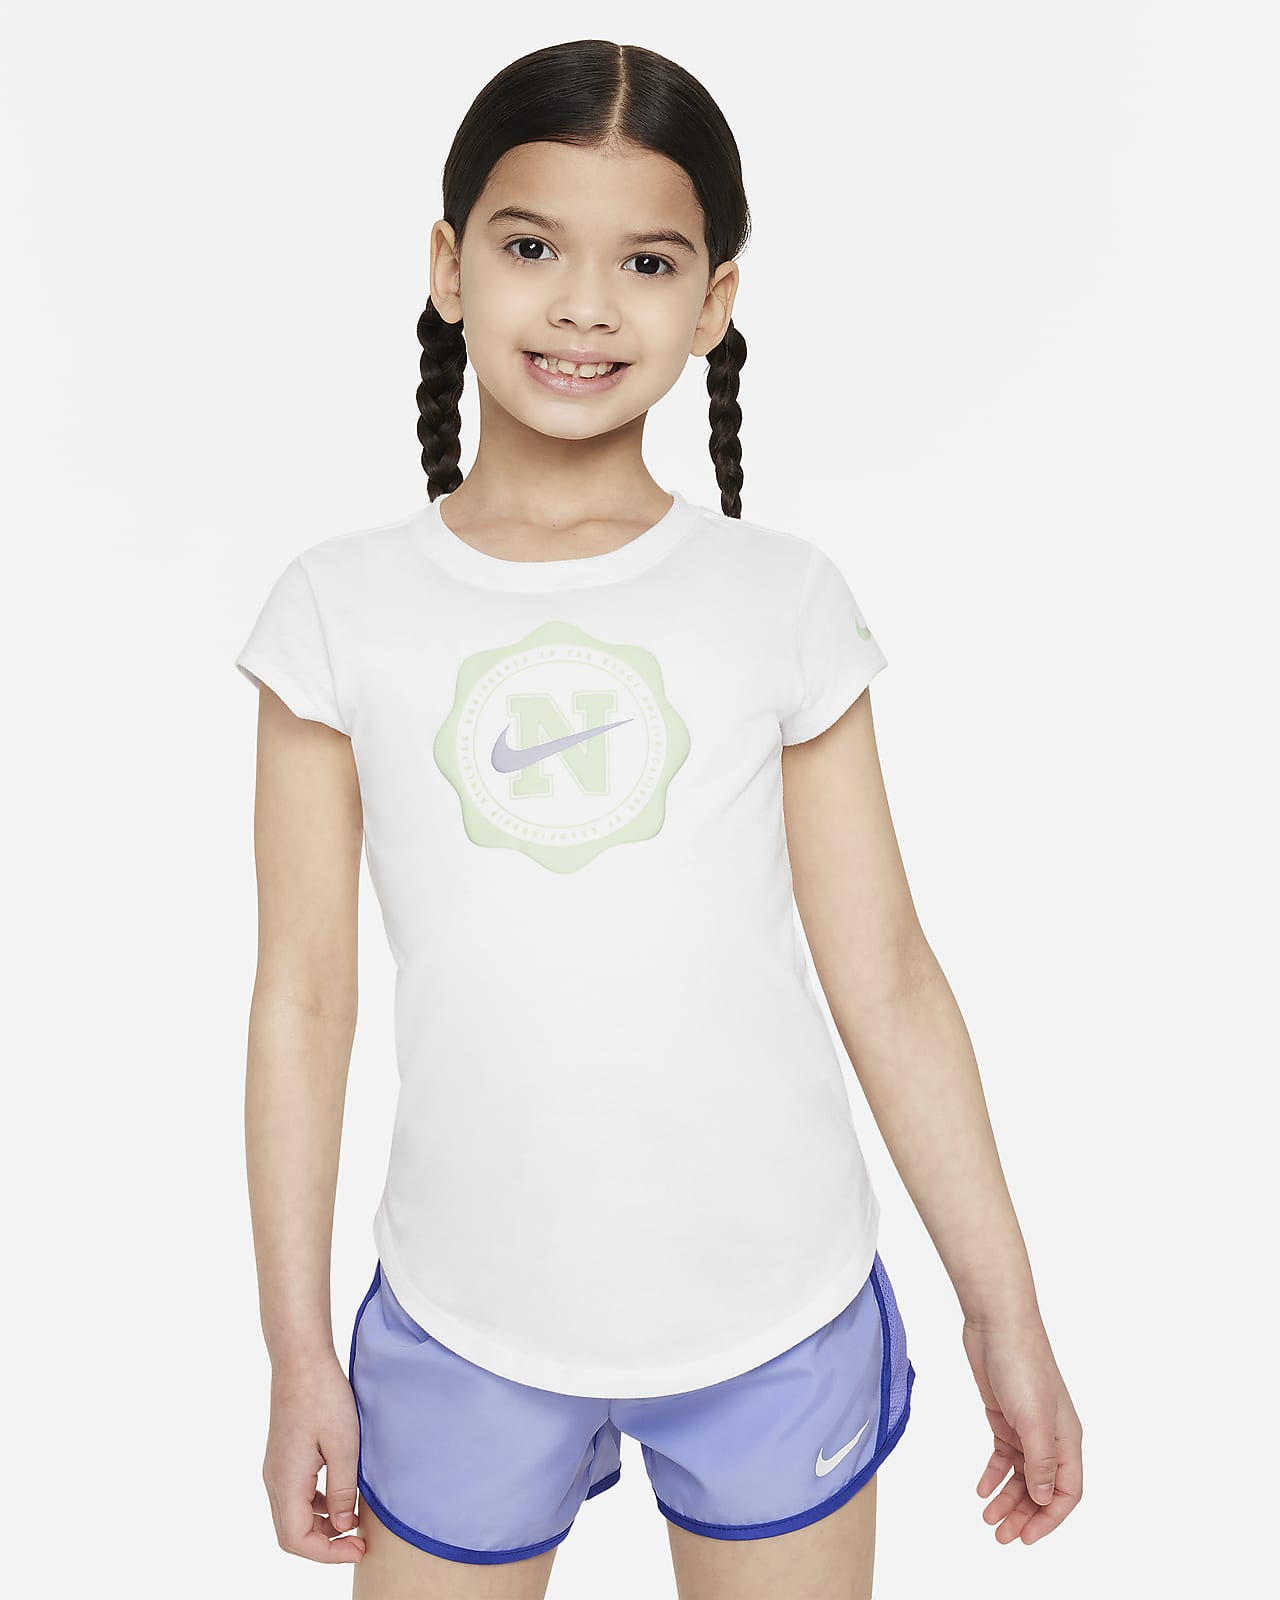 Nike Prep in Your Step Camiseta con estampado - Niño/a pequeño/a